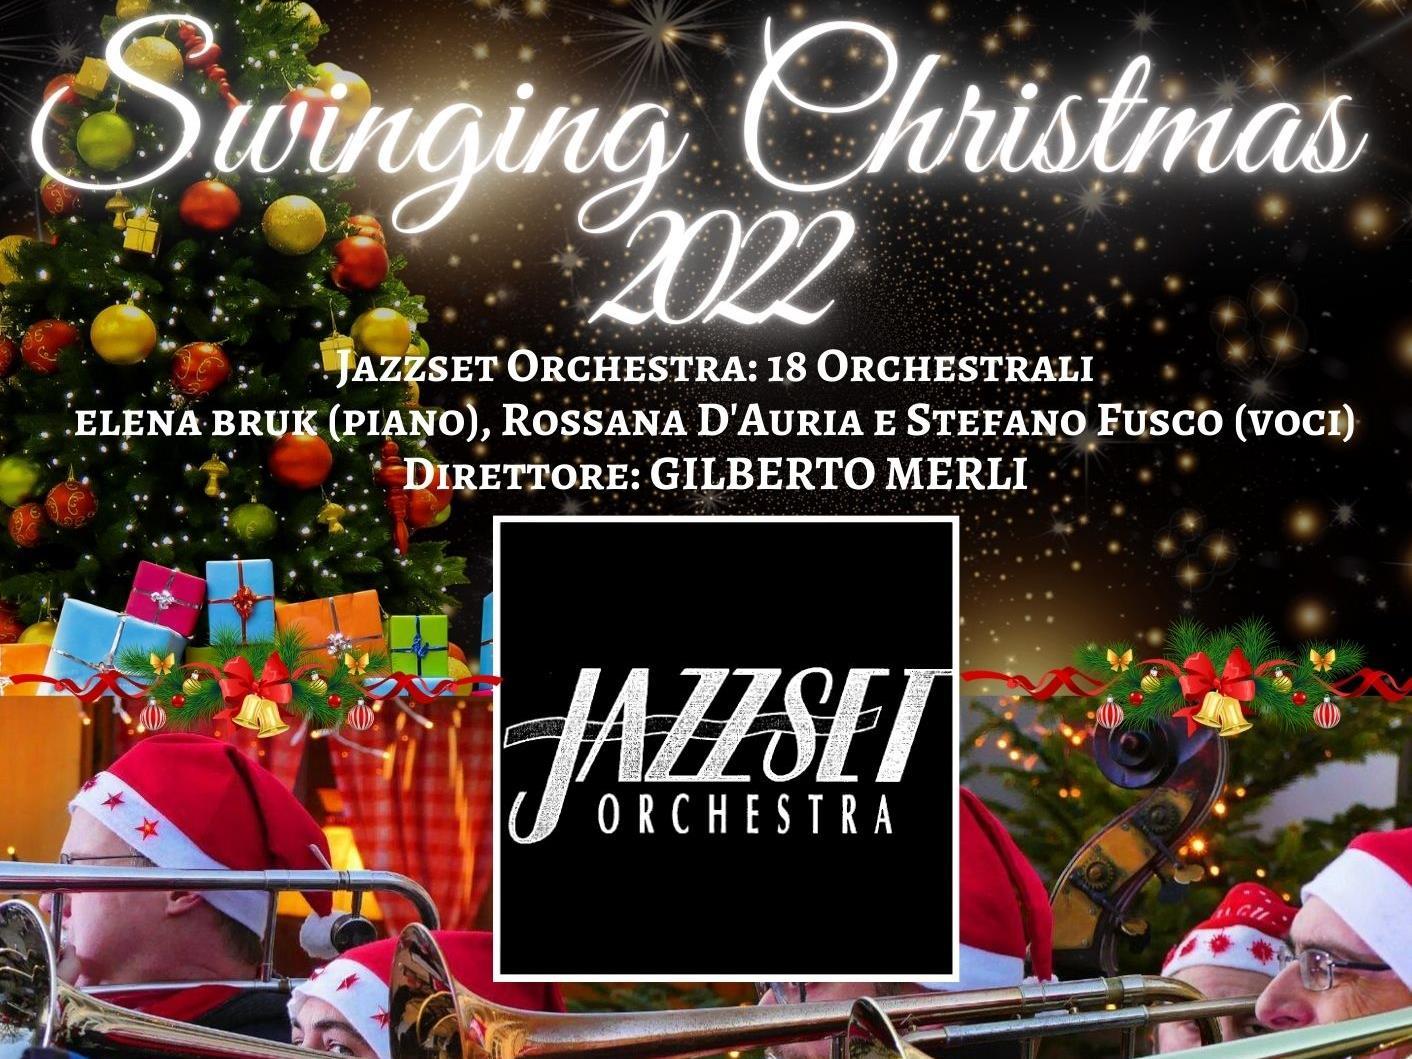 Concert - "Swinging Christmas 2022"